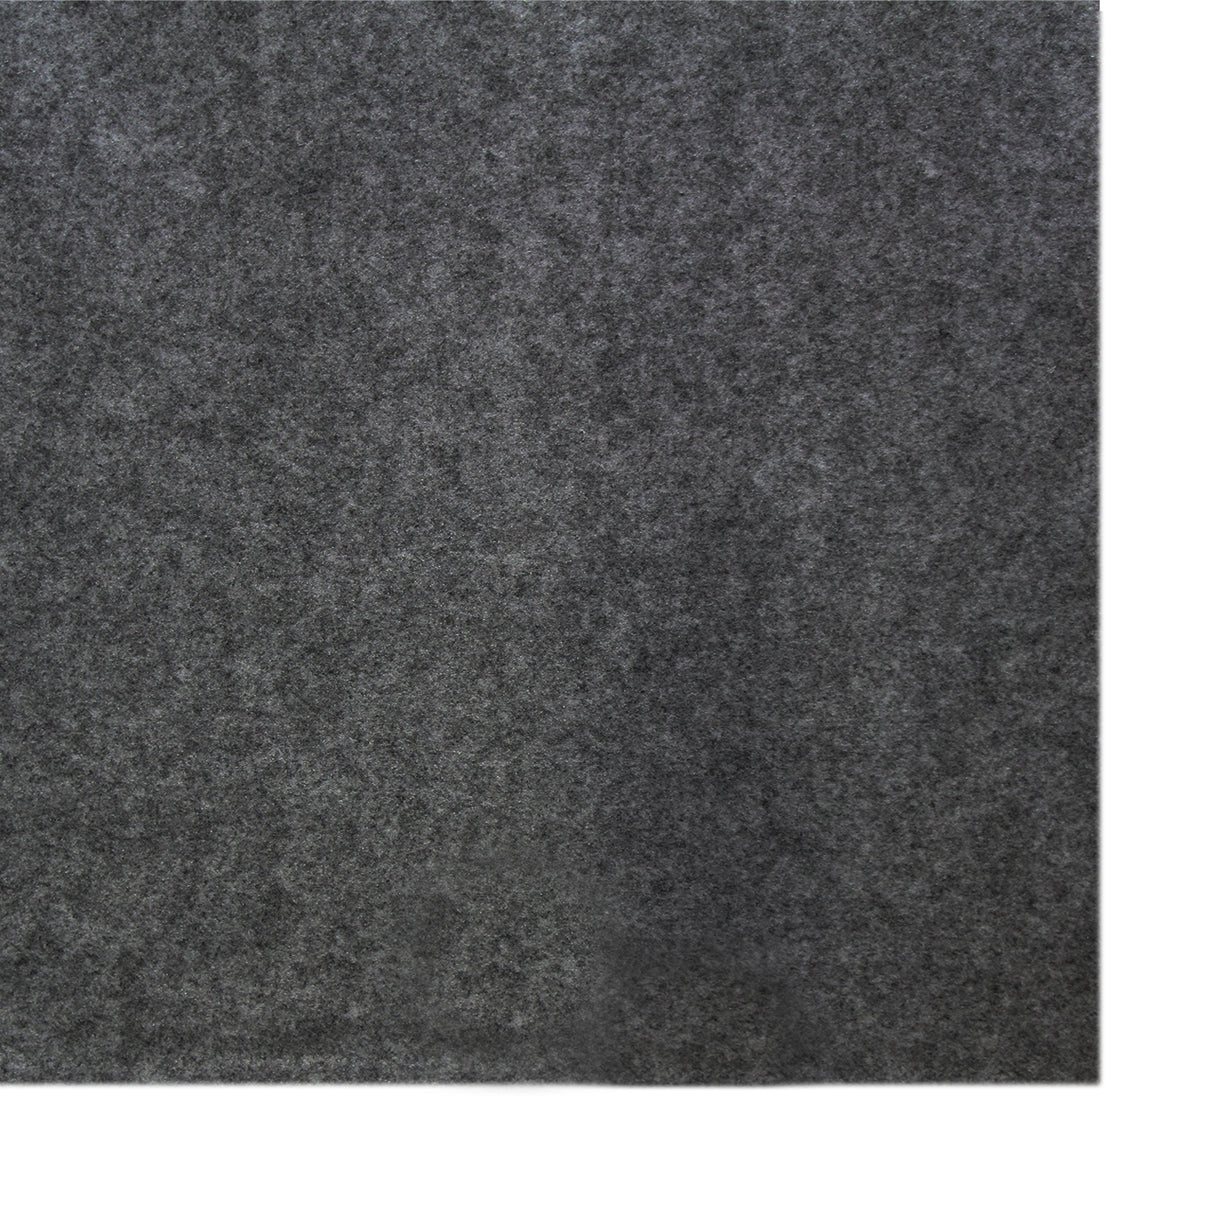 Van Carpet Lining / Anthracite Dark Grey & 5 Adhesive Cans